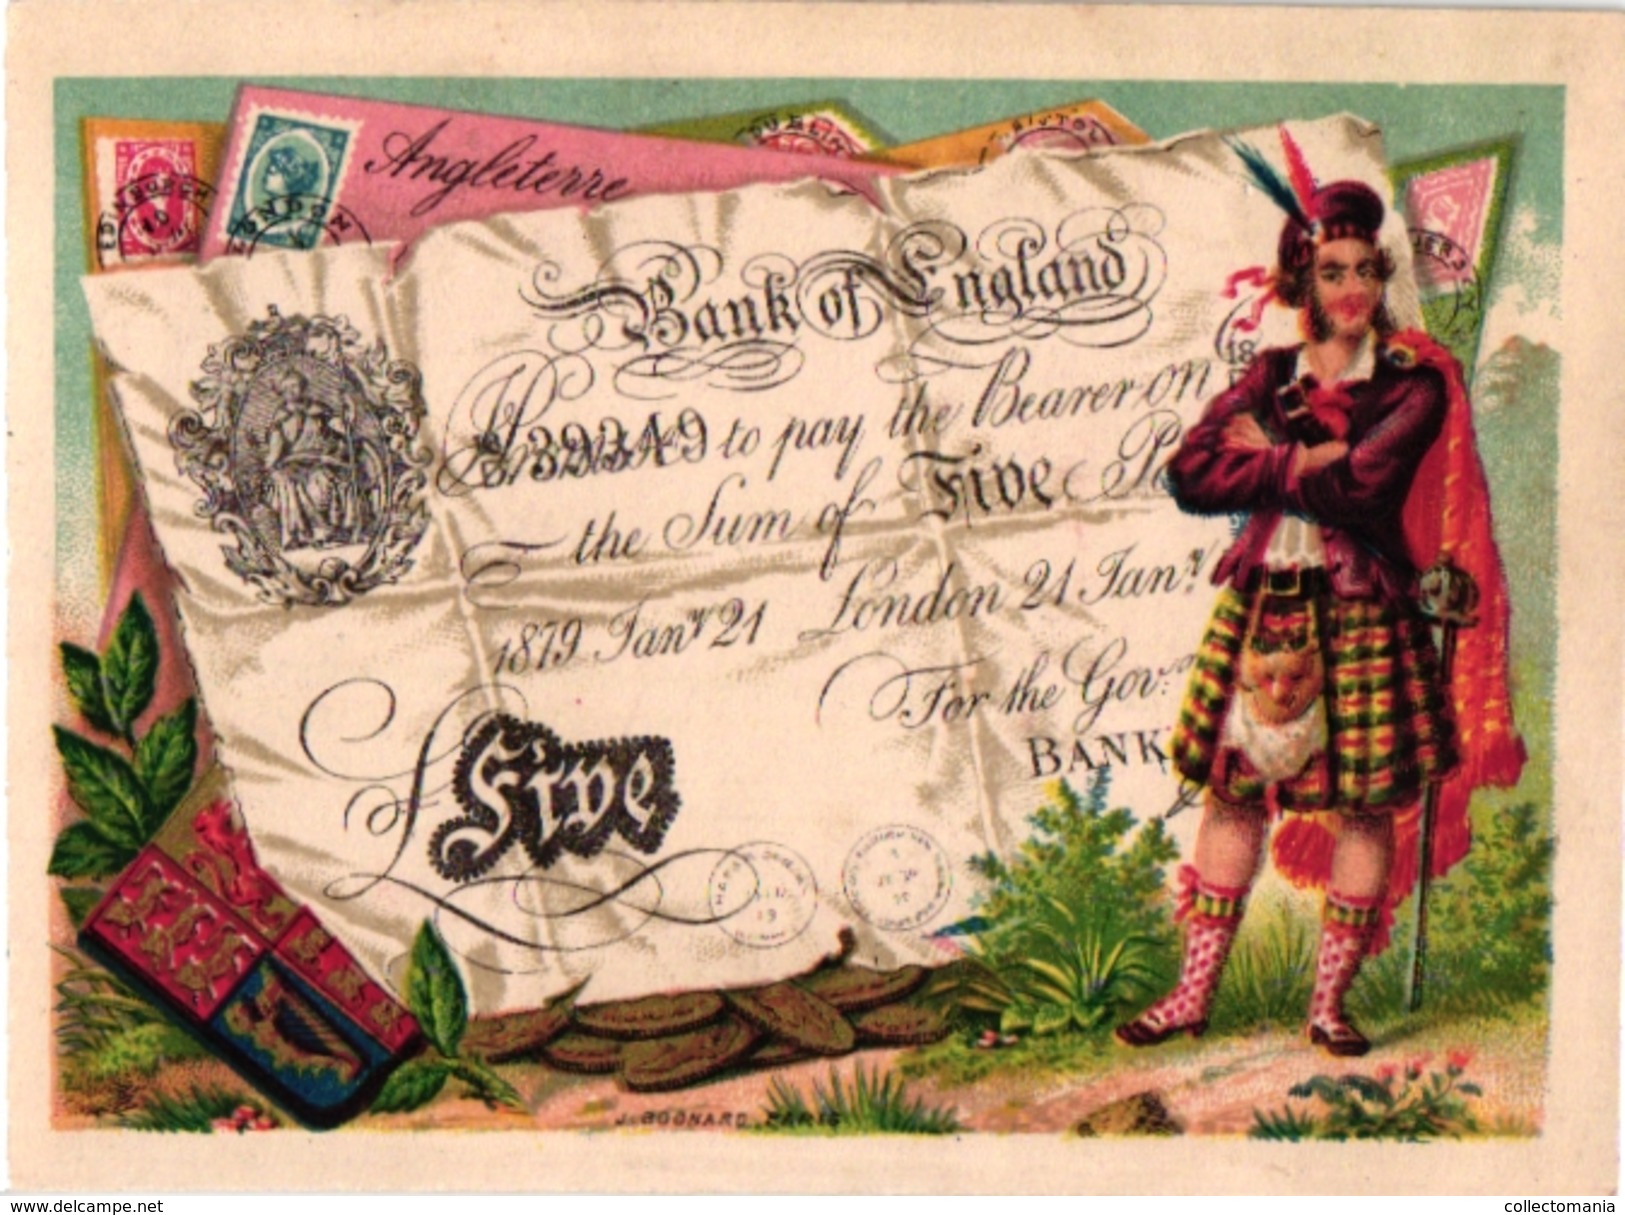 10 Trade Cards Chromo Full Serie Complet SPAIN ESPANA PUB La COLOSAL  CHOCOLATE  SANTANDER CALENDER CALENDARIO 1881 - Big : ...-1900